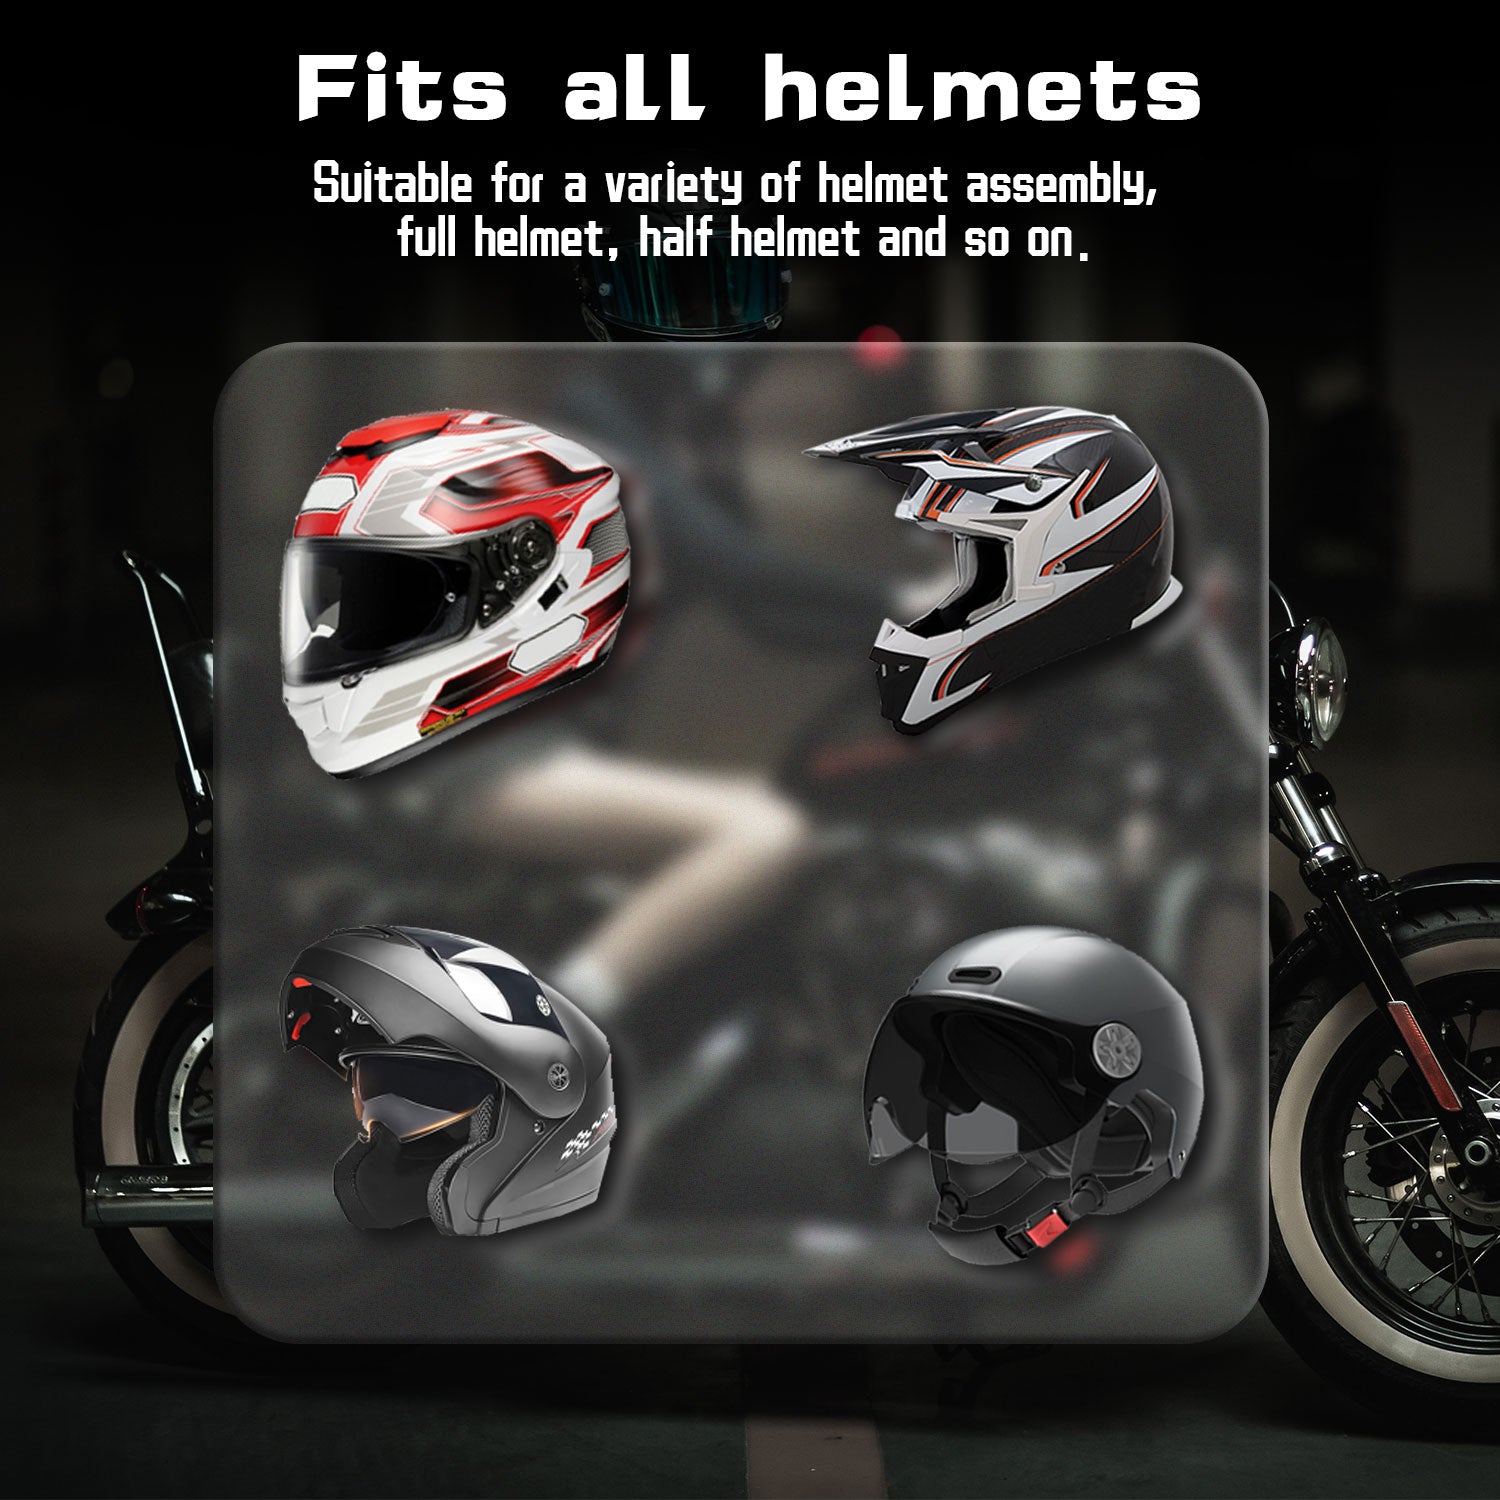 Fodsports Helmet Intercom Headsets Comparison